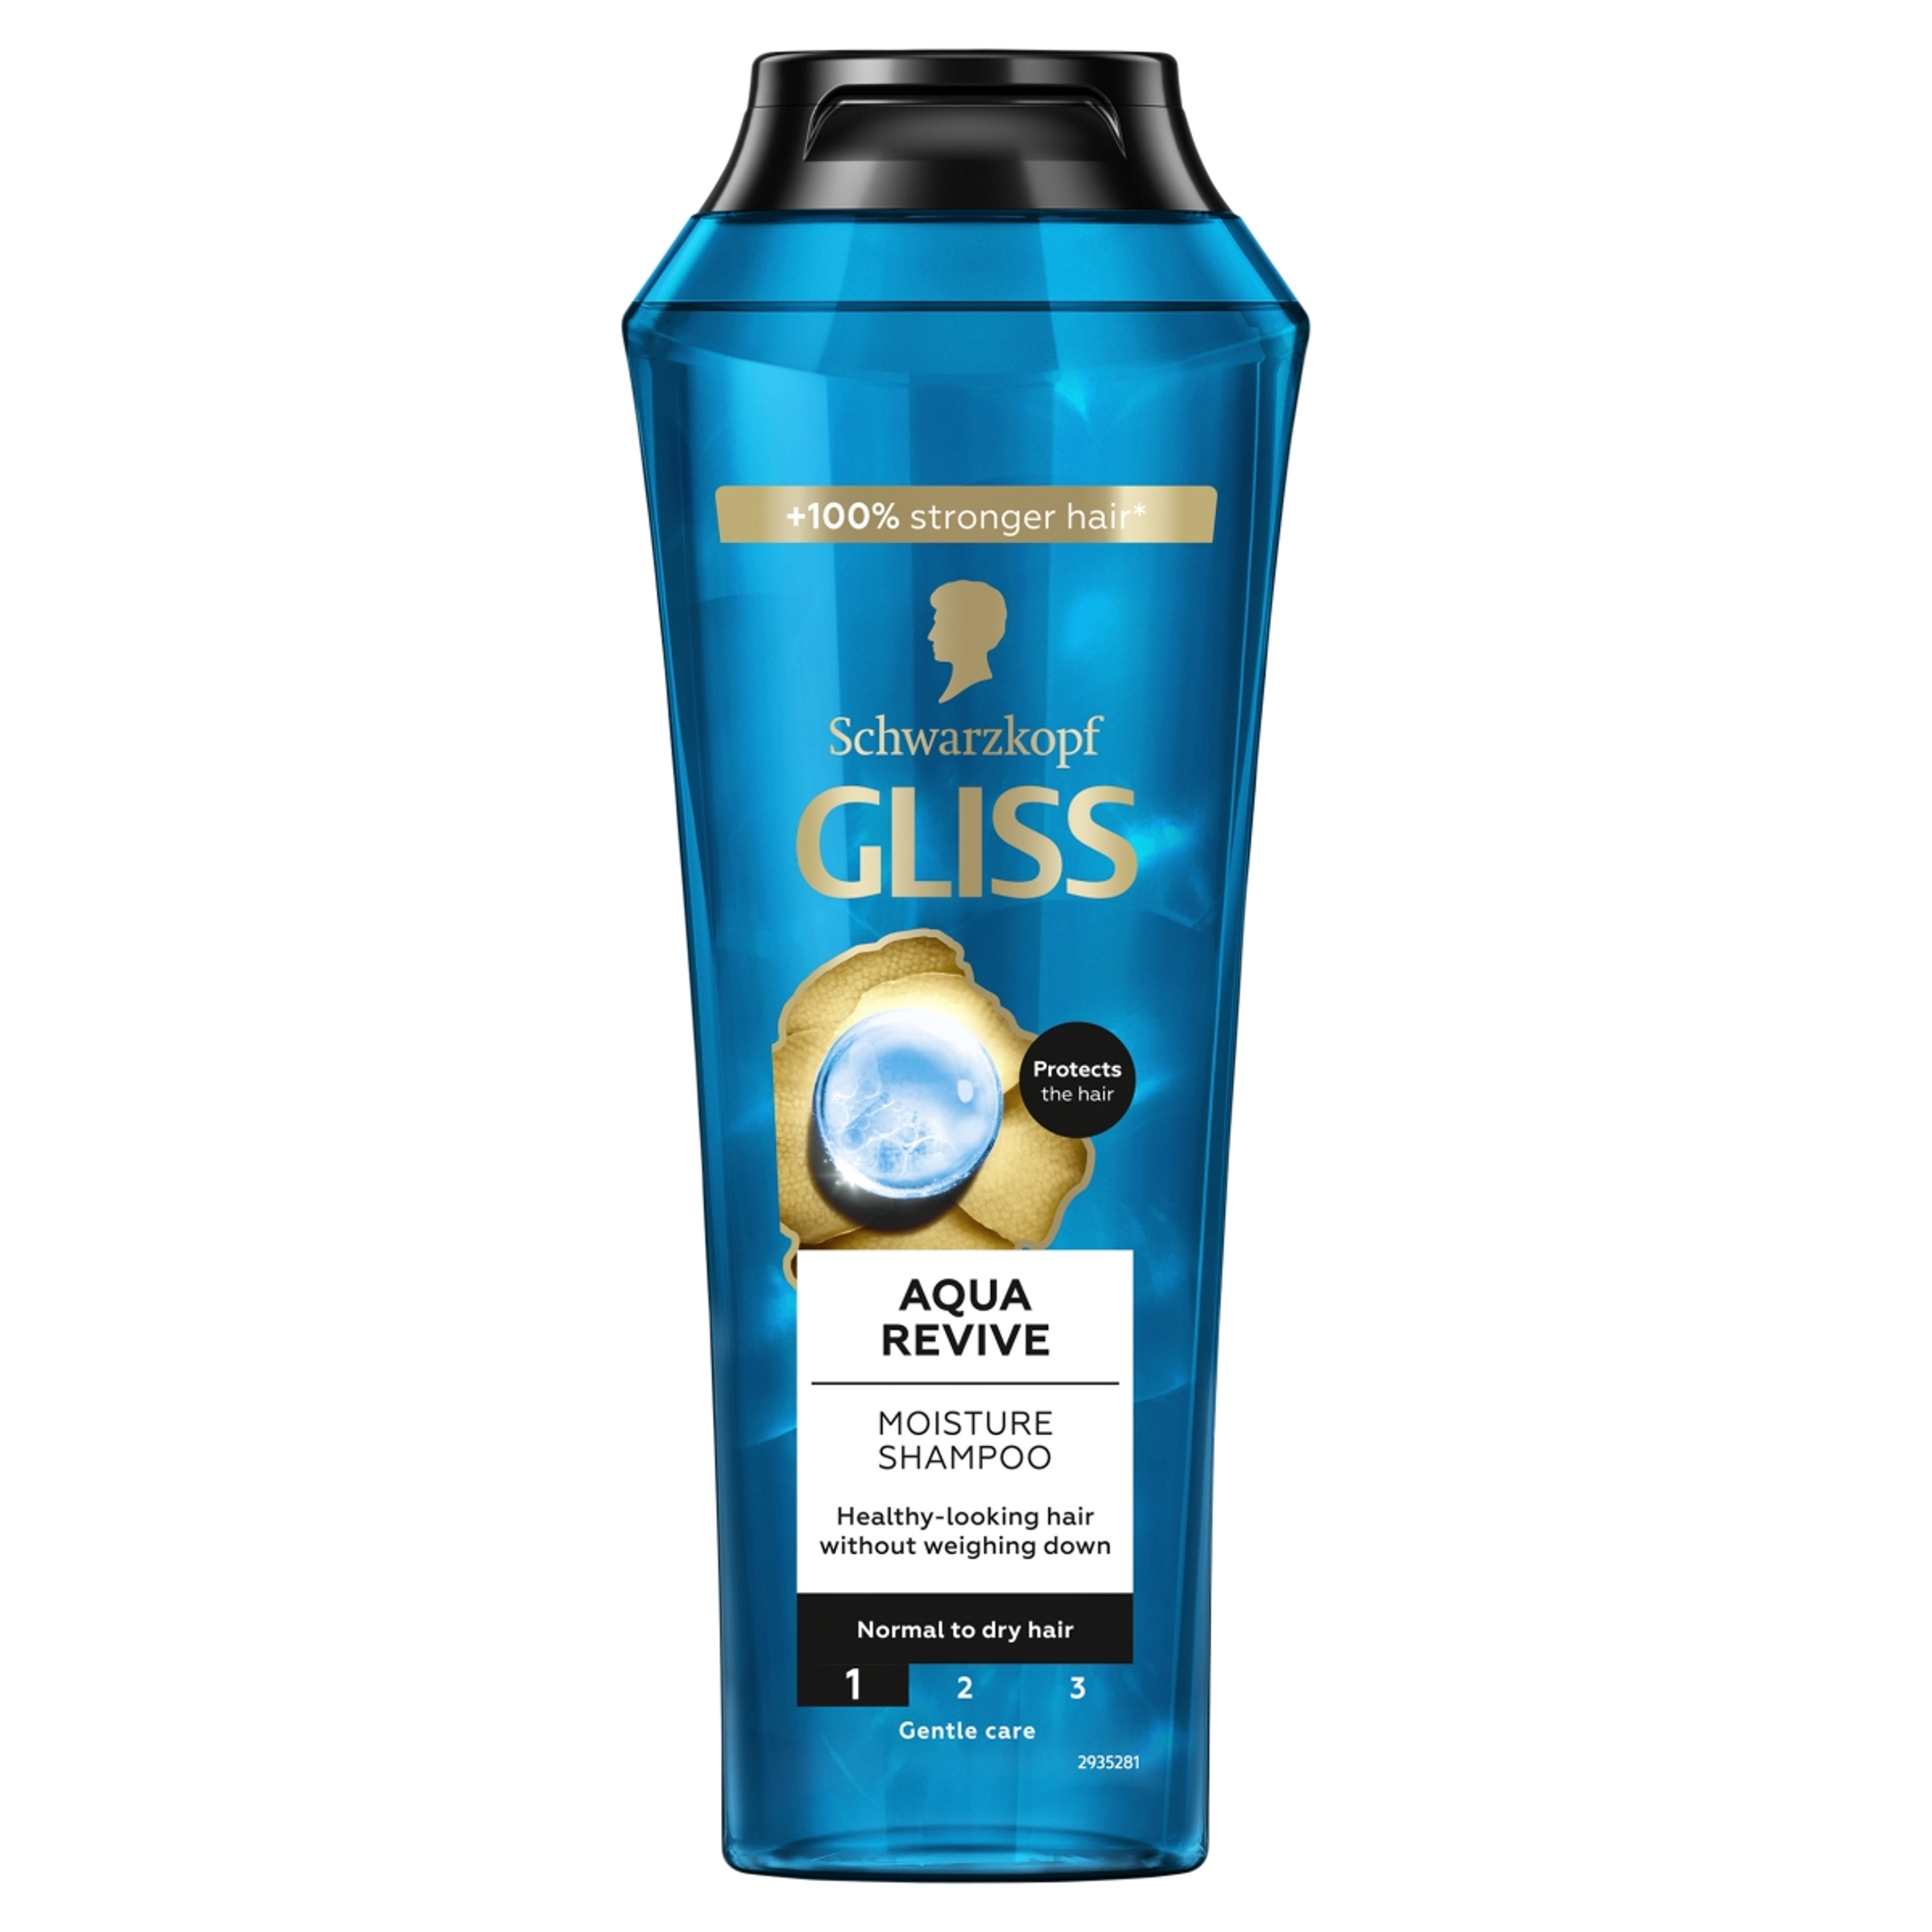 Gliss Aqua Revive sampon - 250 ml